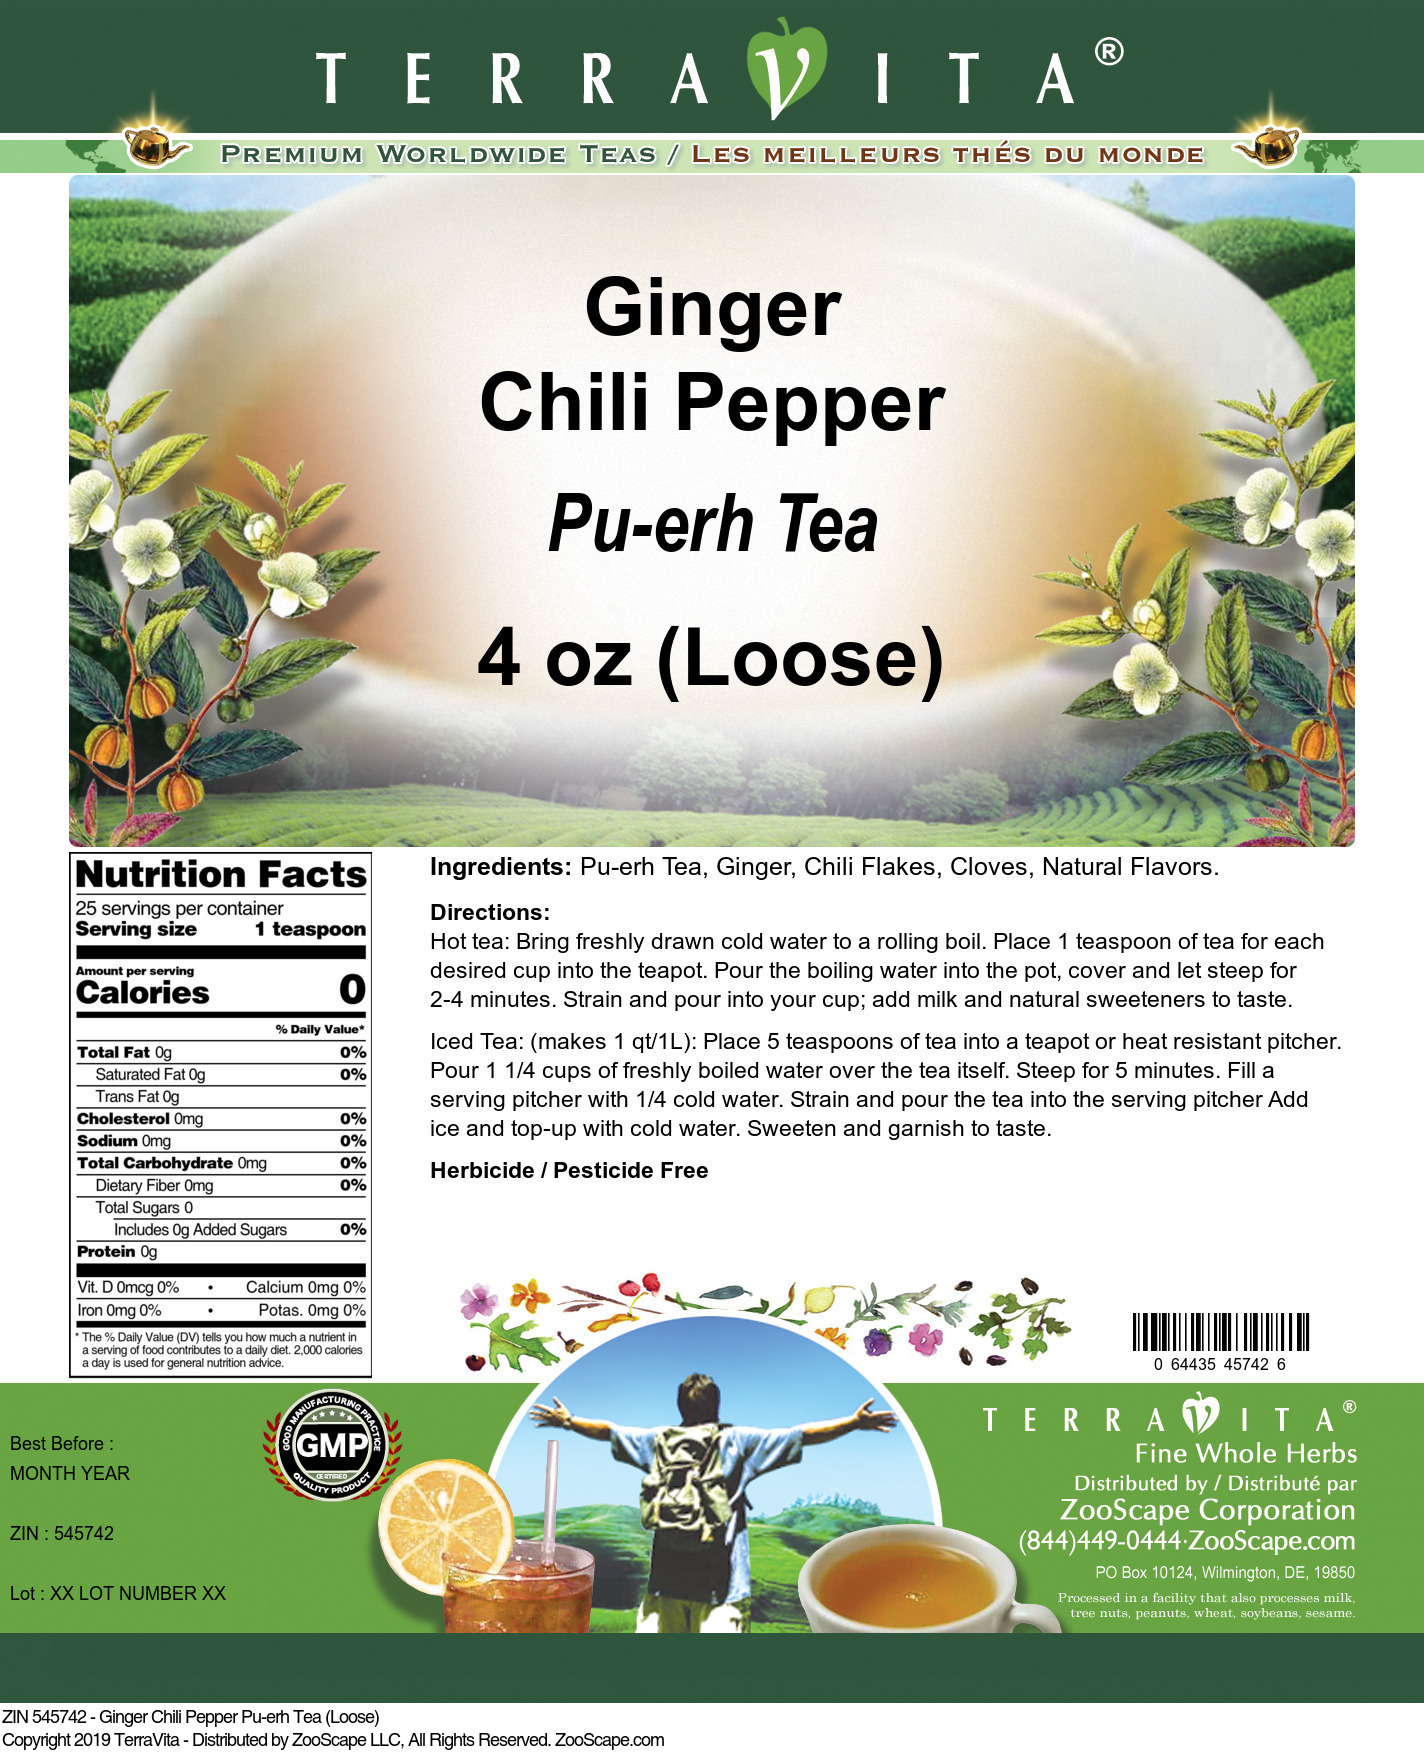 Ginger Chili Pepper Pu-erh Tea (Loose) - Label